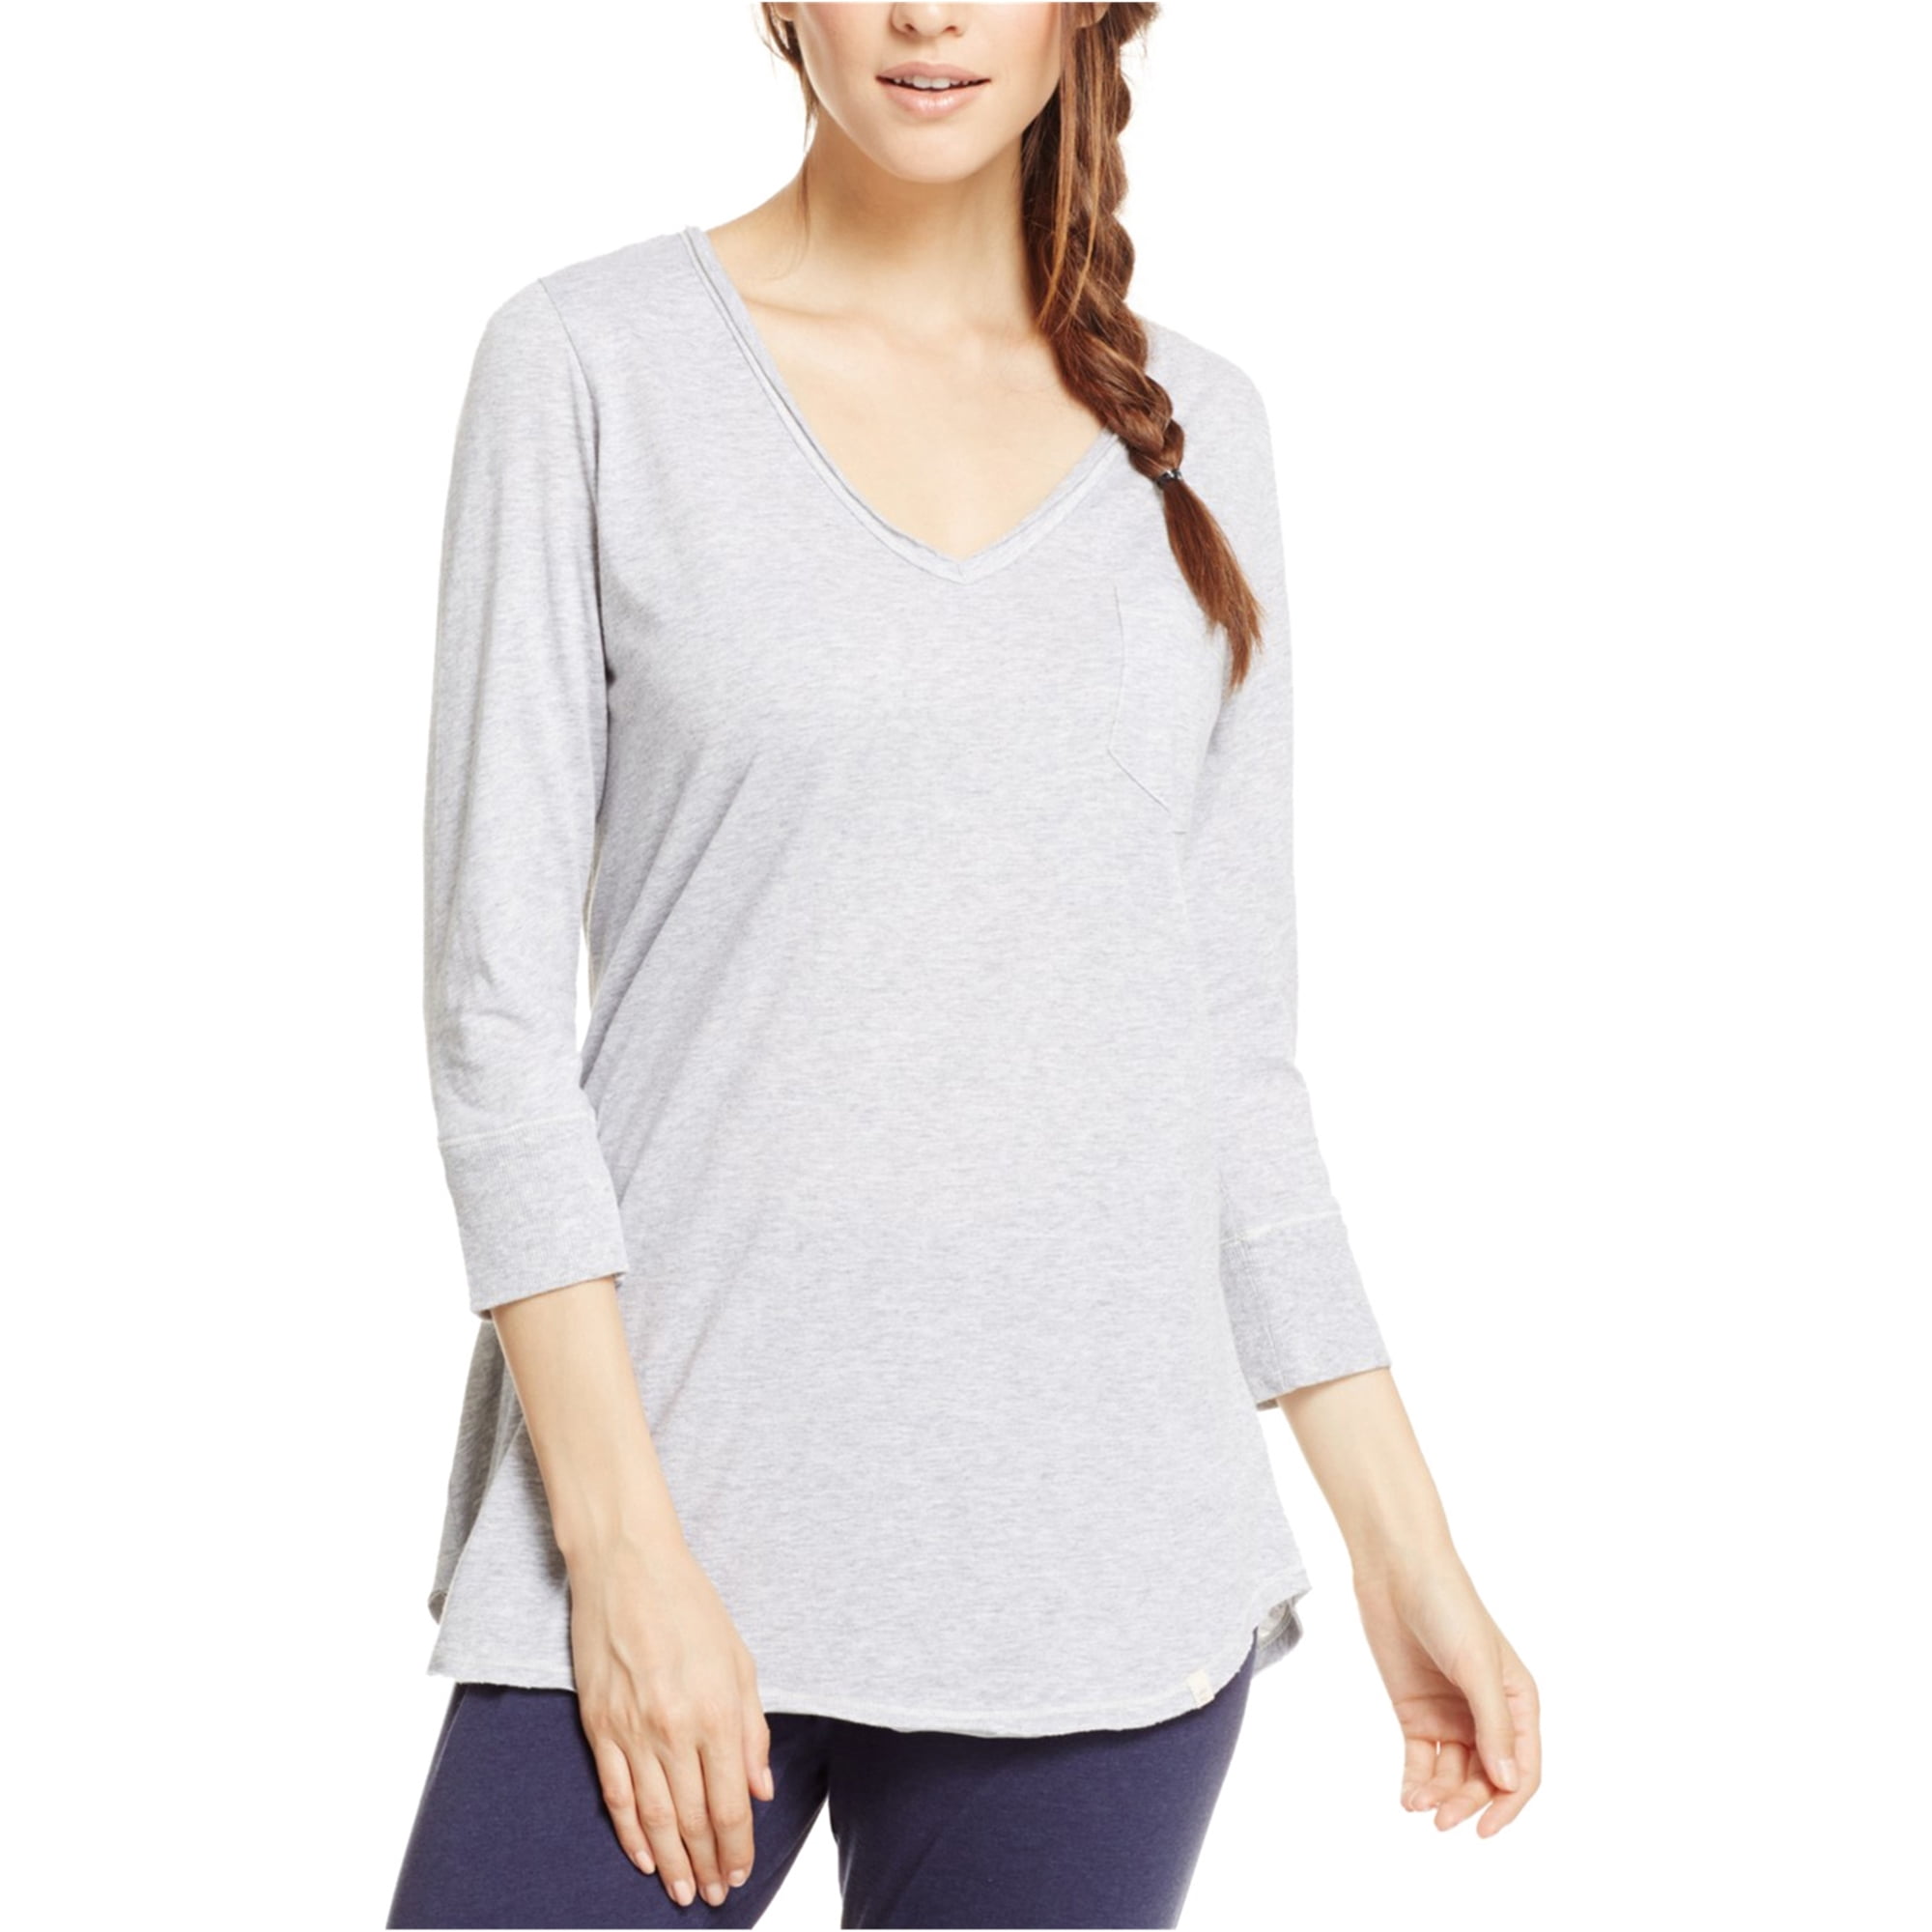 Lucky Brand - Lucky Brand Womens V-NECK Basic T-Shirt, Grey, Medium ...